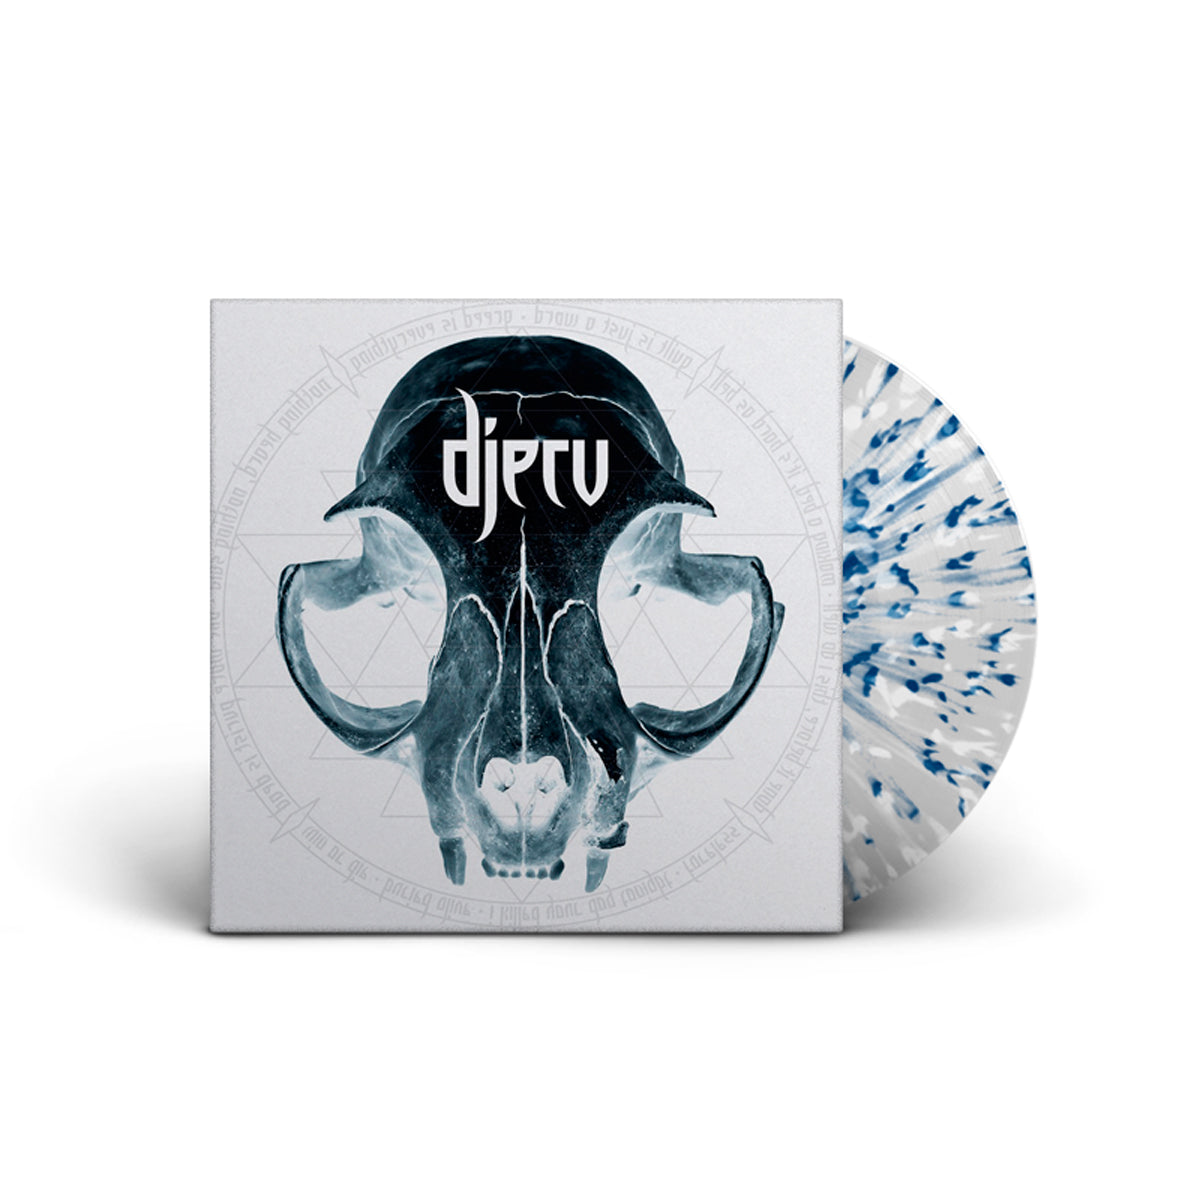 DJERV - Djerv (LP Transparent W/ Blue/White Splatter)